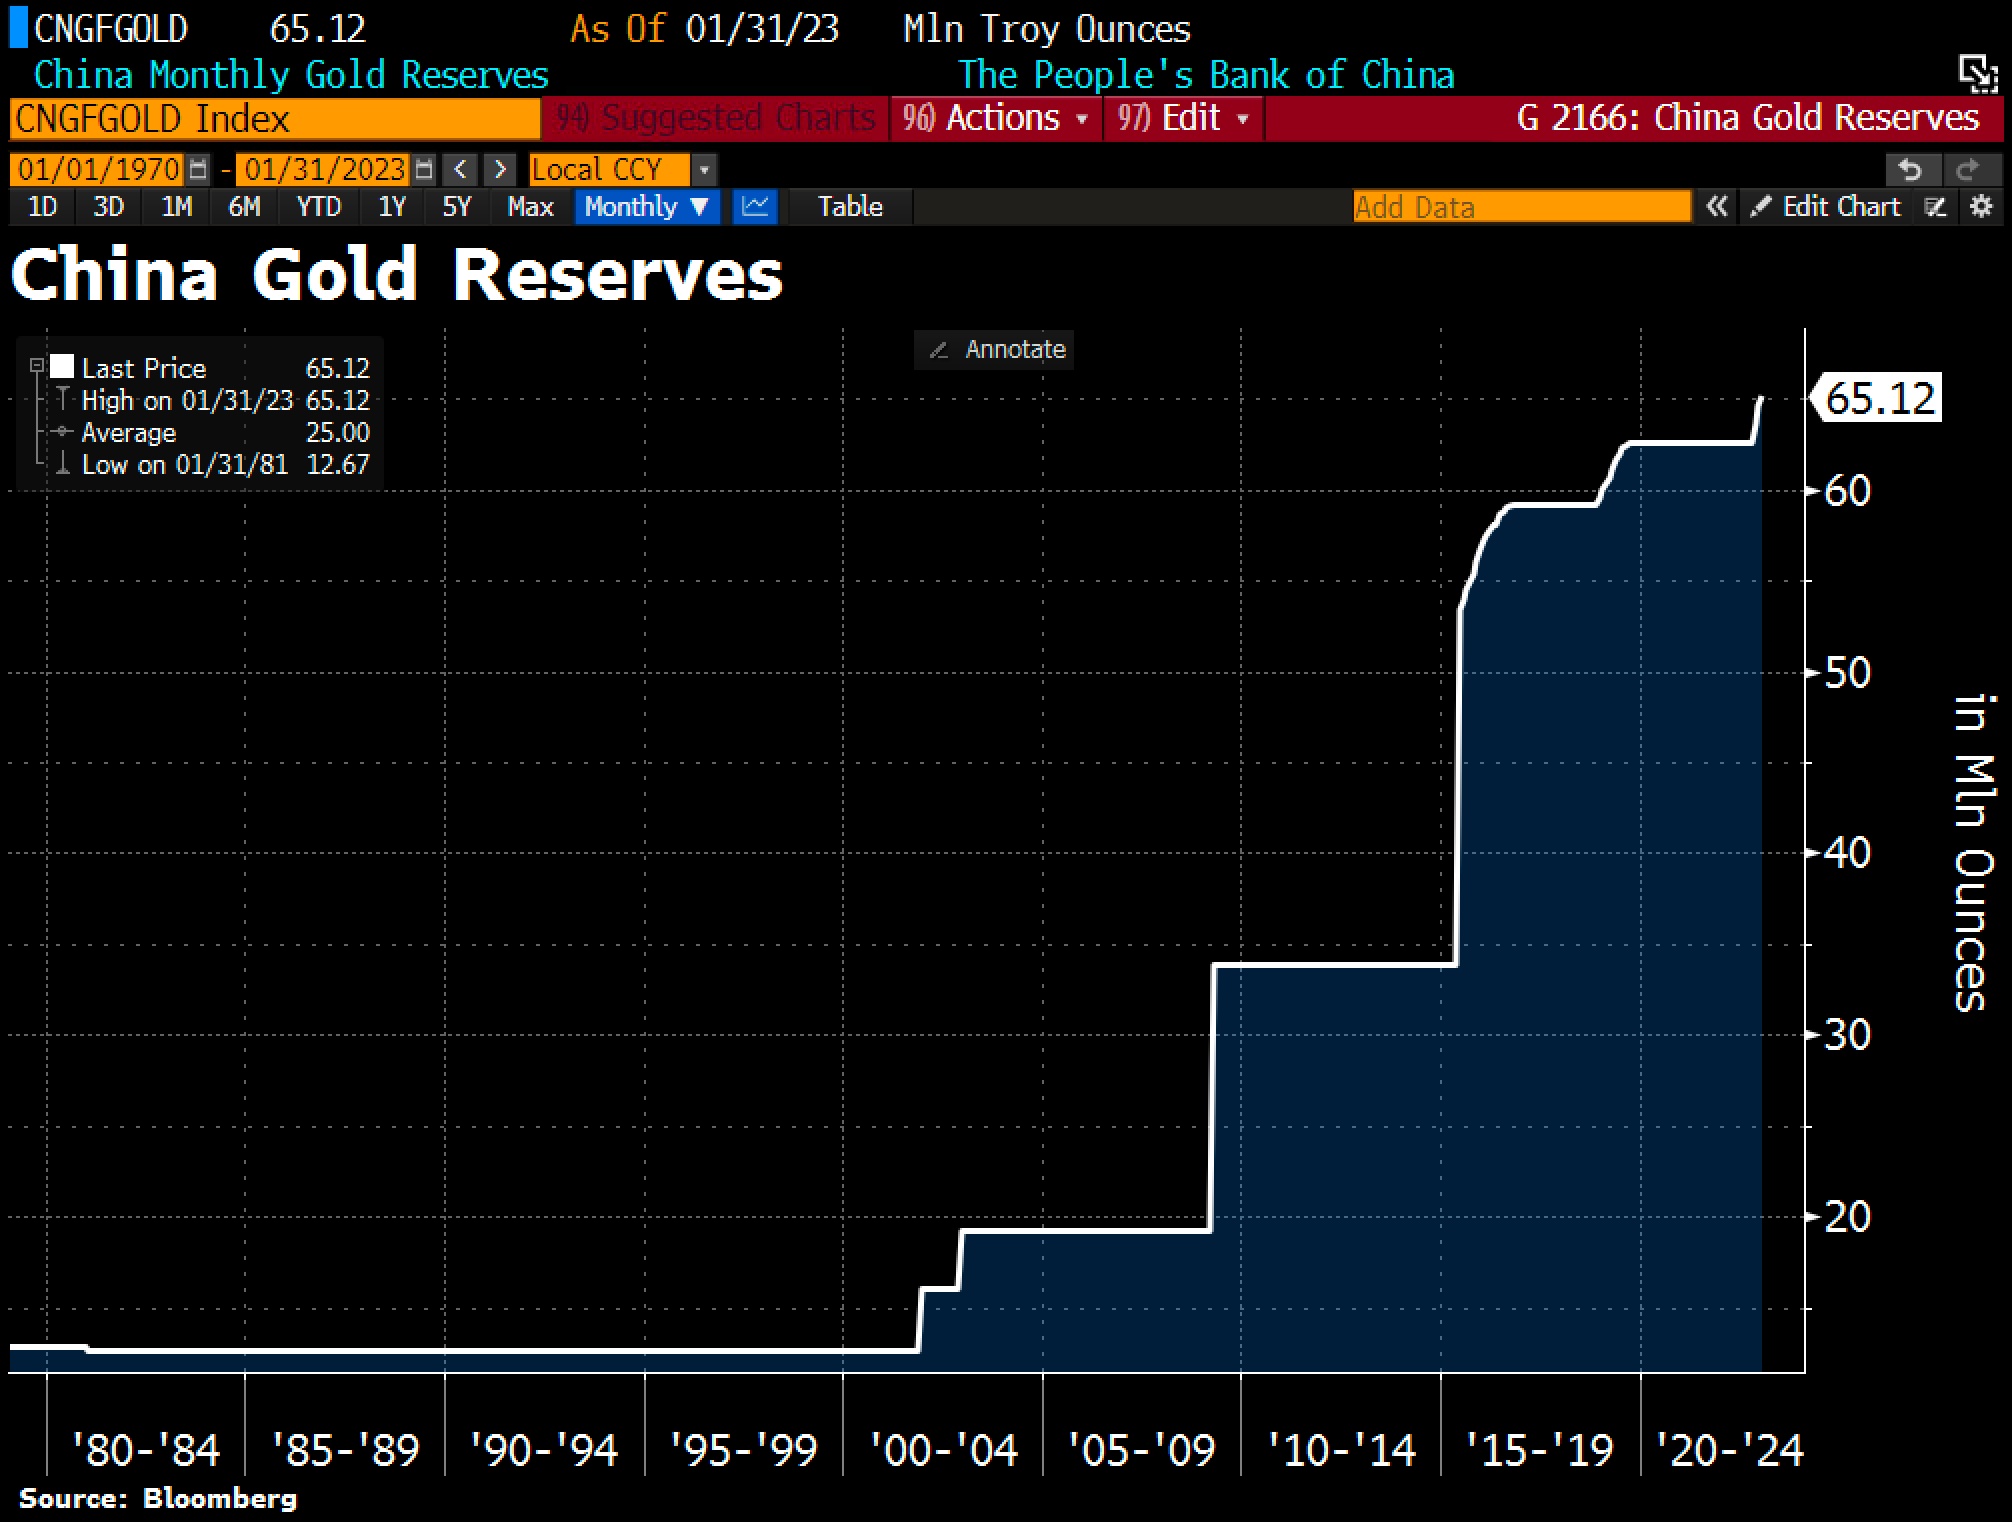 China Gold Reserves keep growing